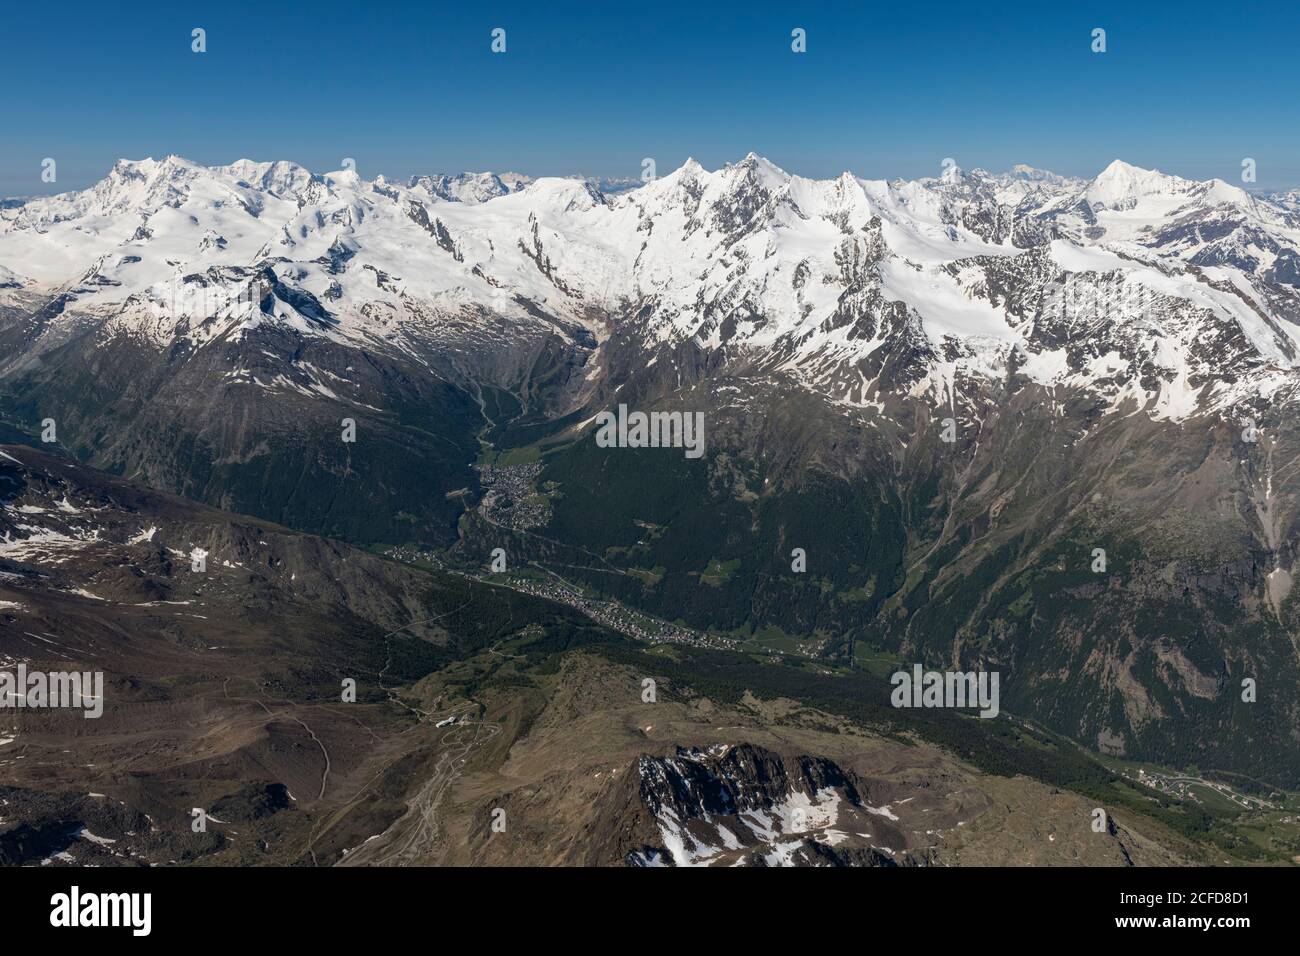 Switzerland, Canton Valais, Saas Valley, Saas-Fee with a view of Monte Rosa, Liskamm, Castor, Pollux, Breithorn, Strahlhorn, Rimpfischhorn, Stock Photo